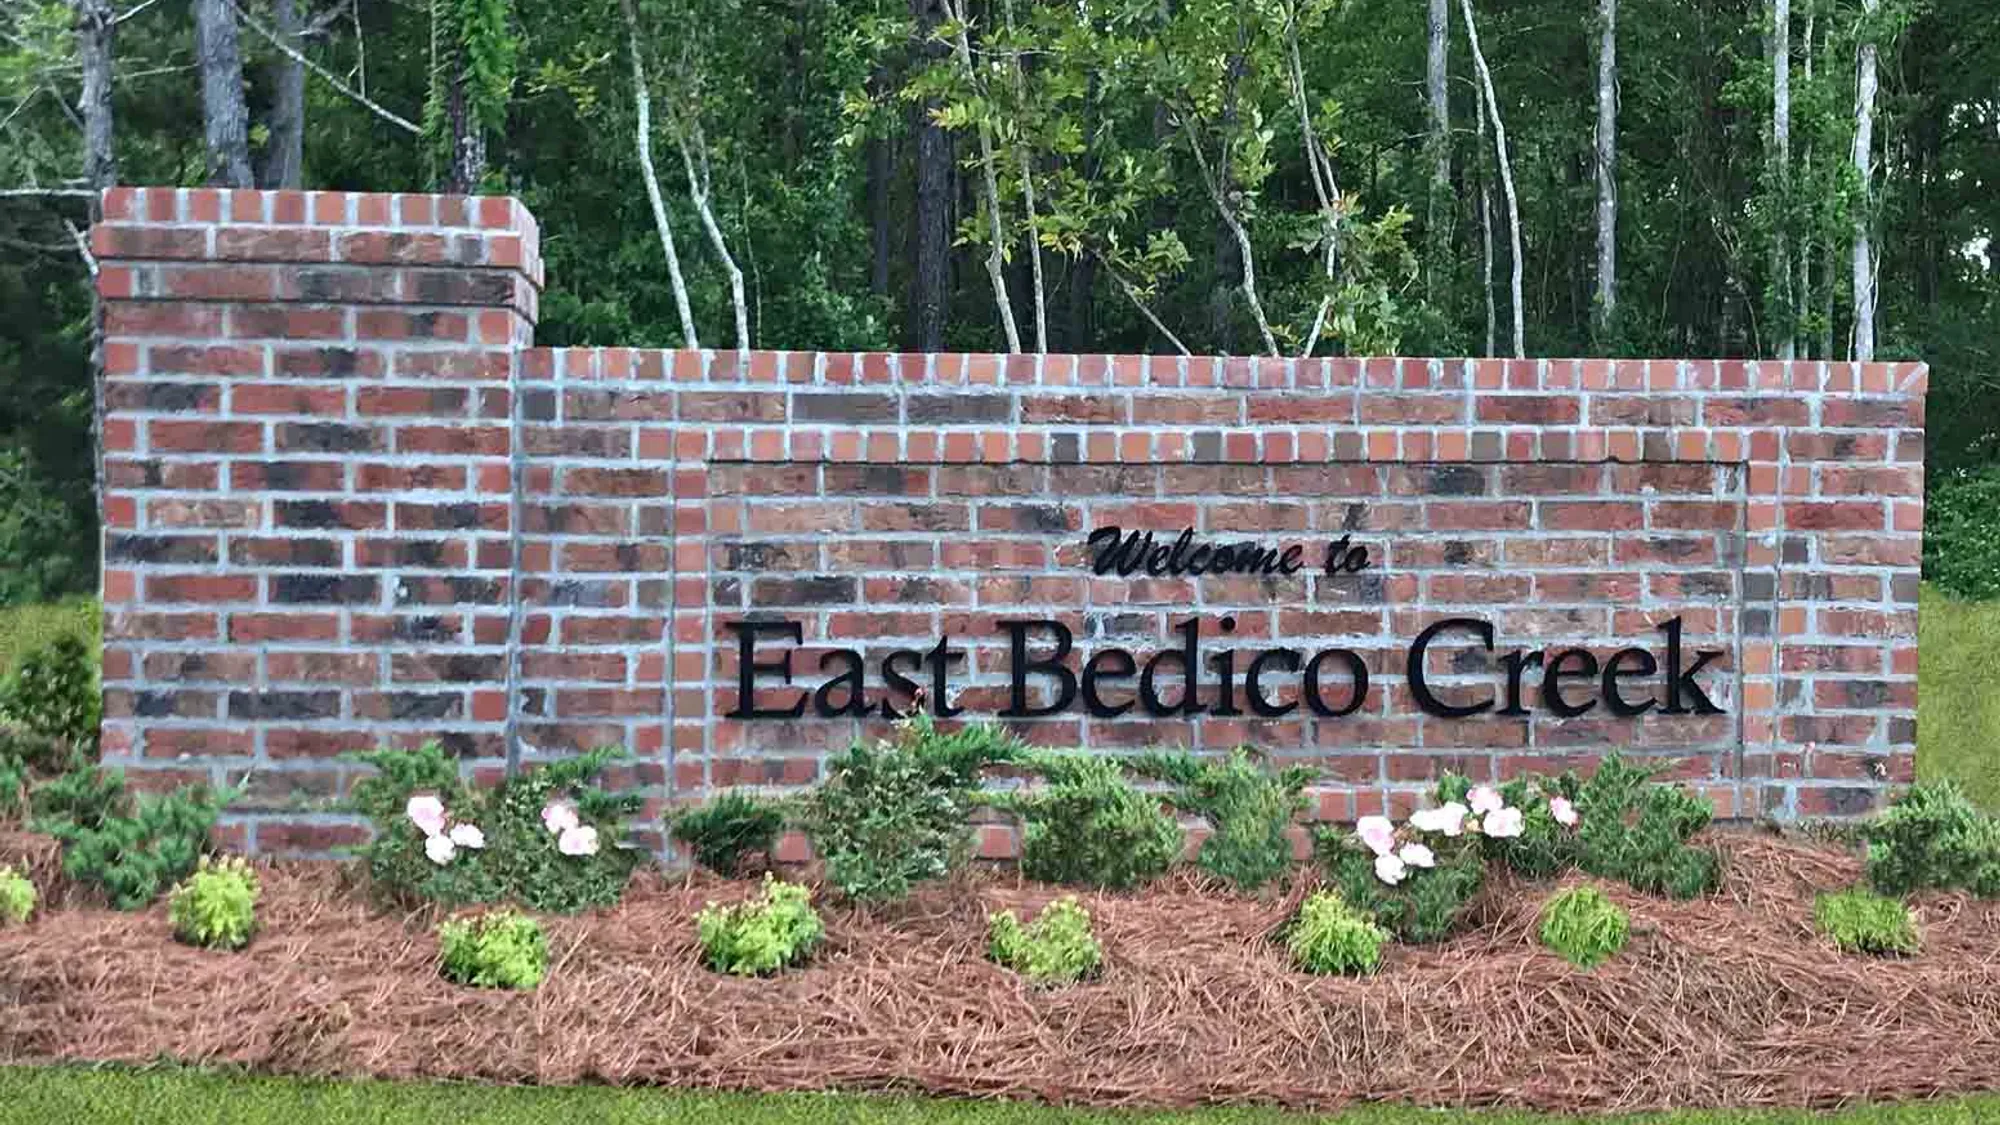 East Bedico Creek Monument Community Entrance - DSLD Homes - Hammond